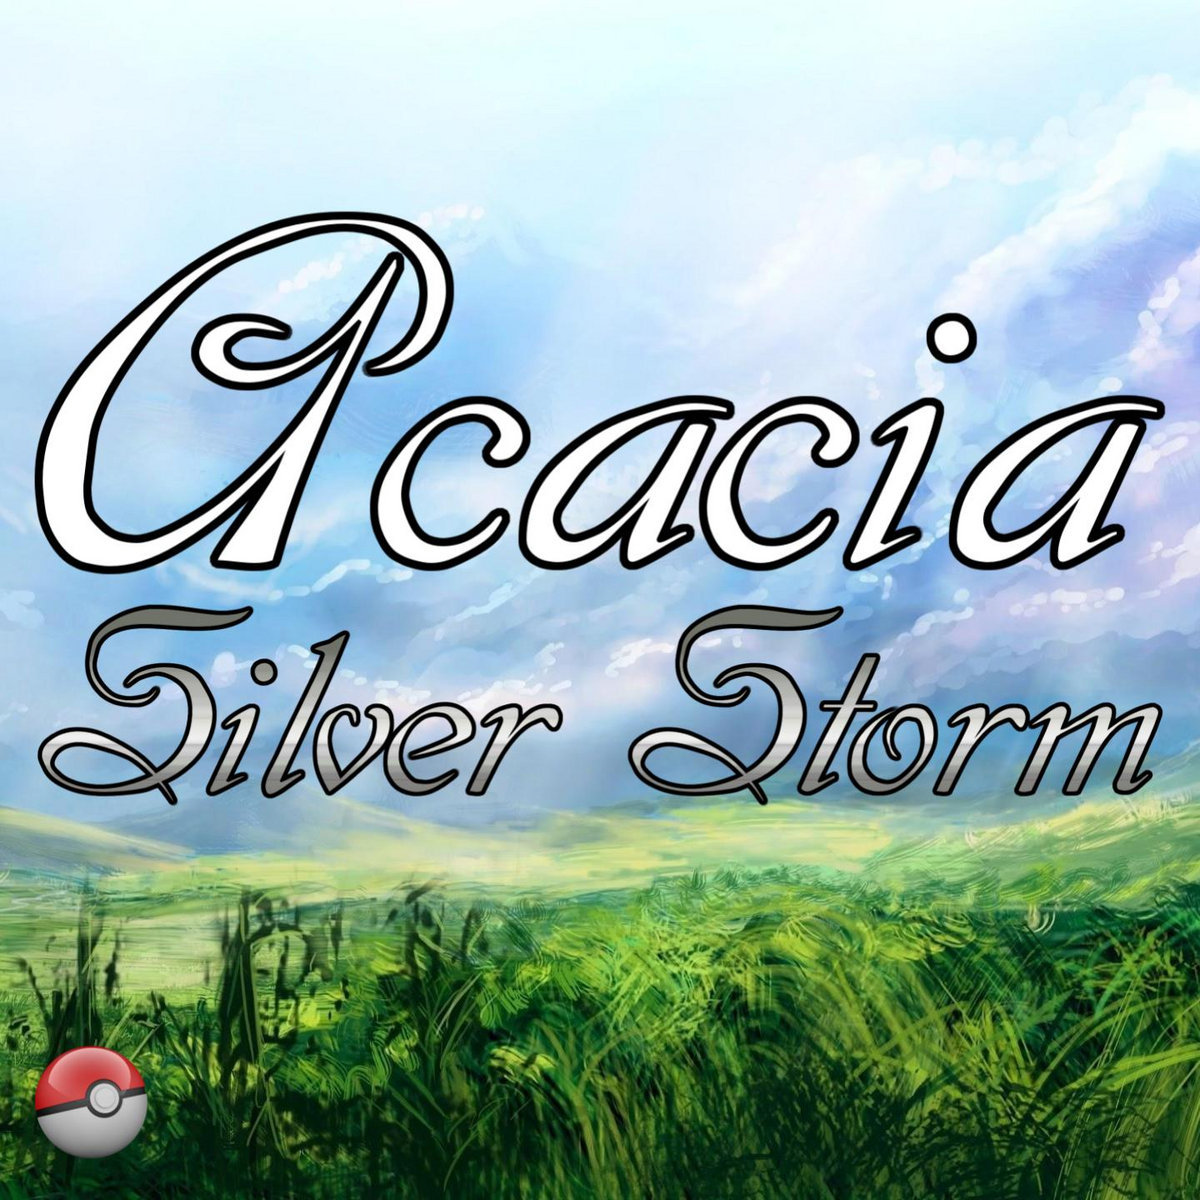 Acacia Silver Storm